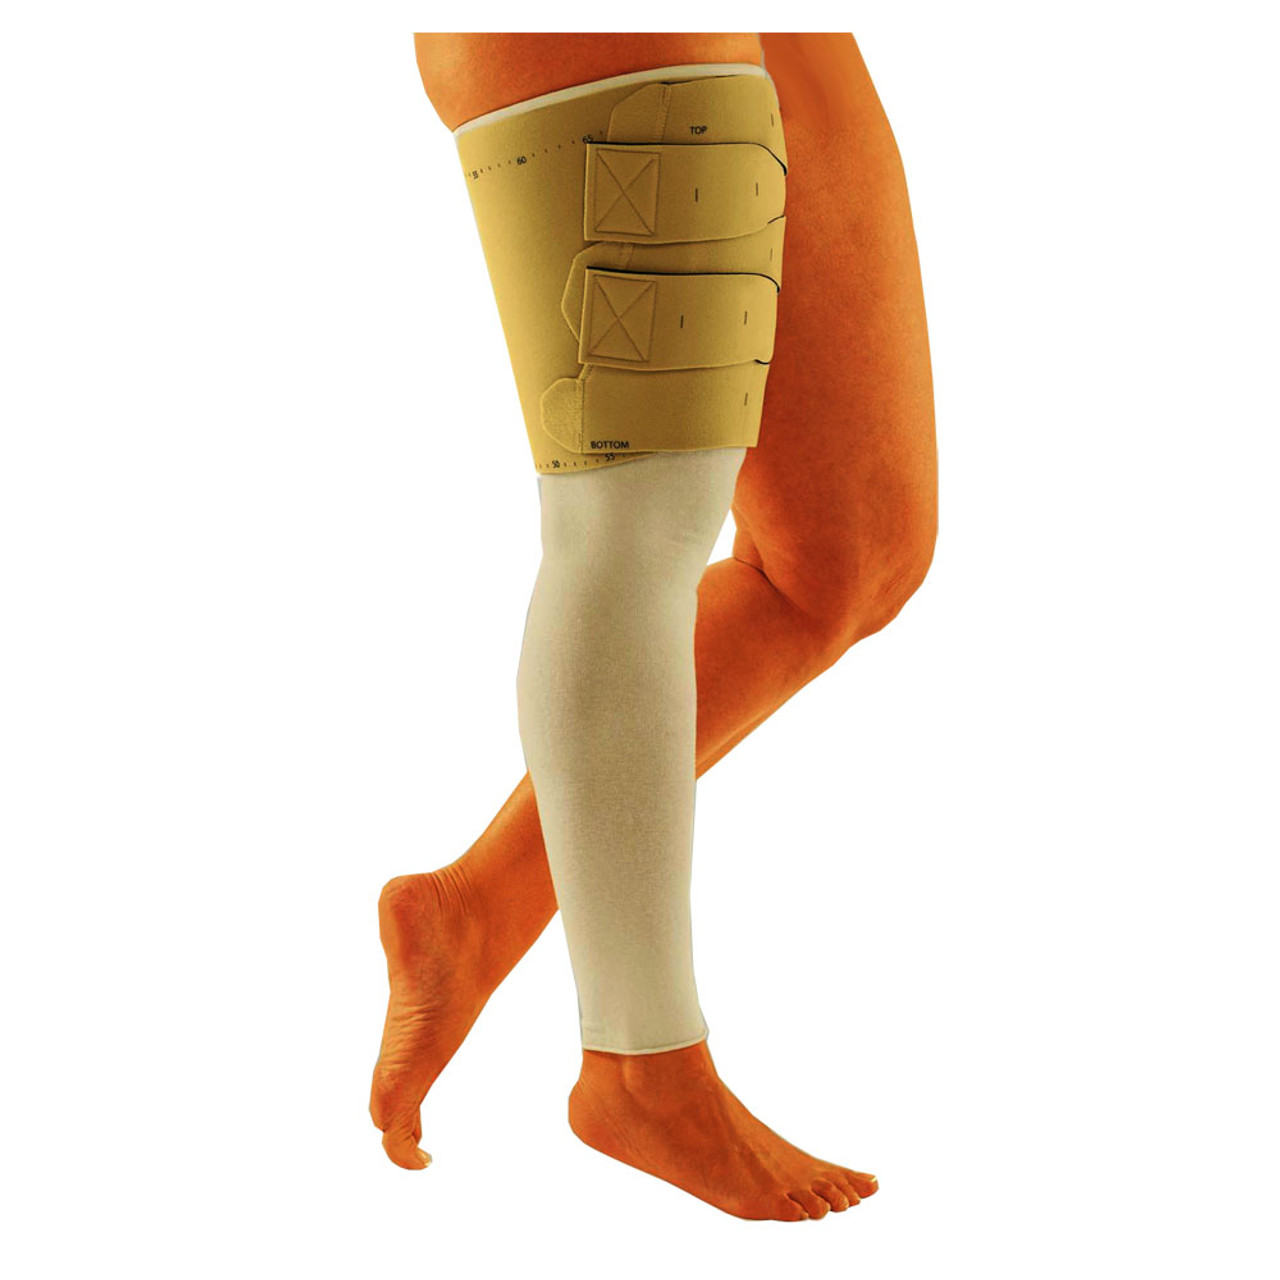 Circaid Reduction Kit Upper Leg